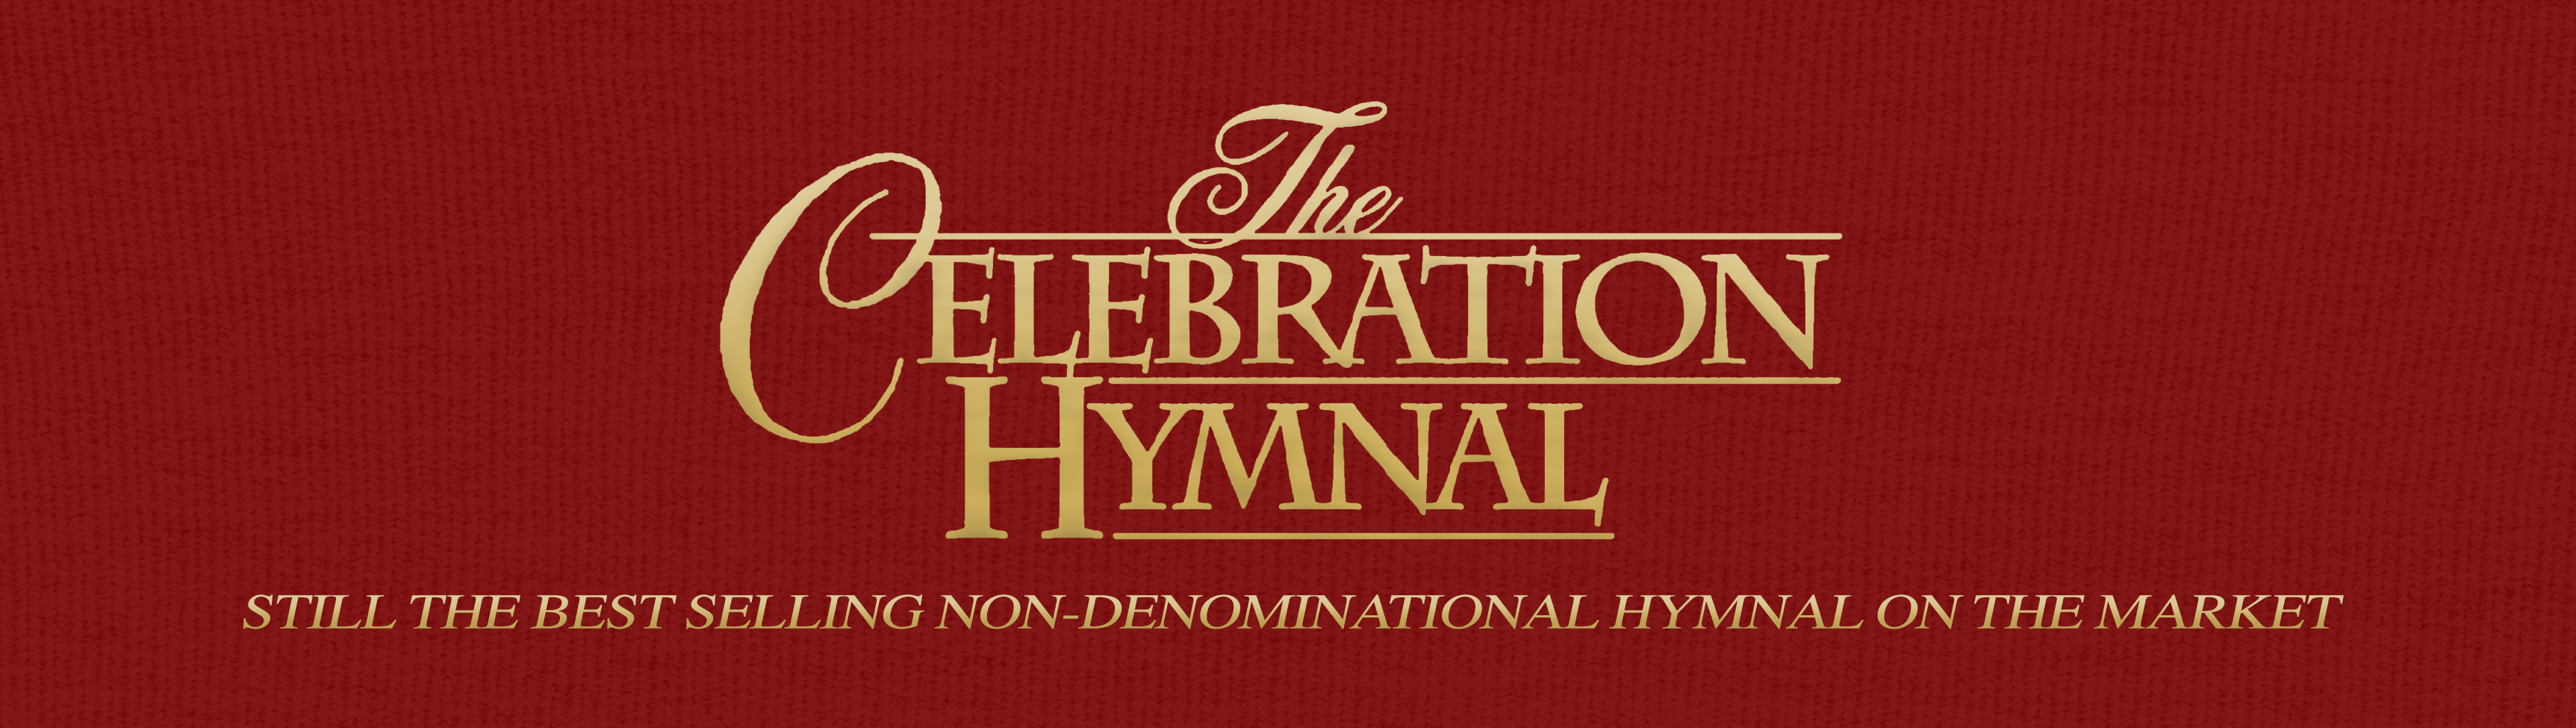 celebration hymnal accompanist edition